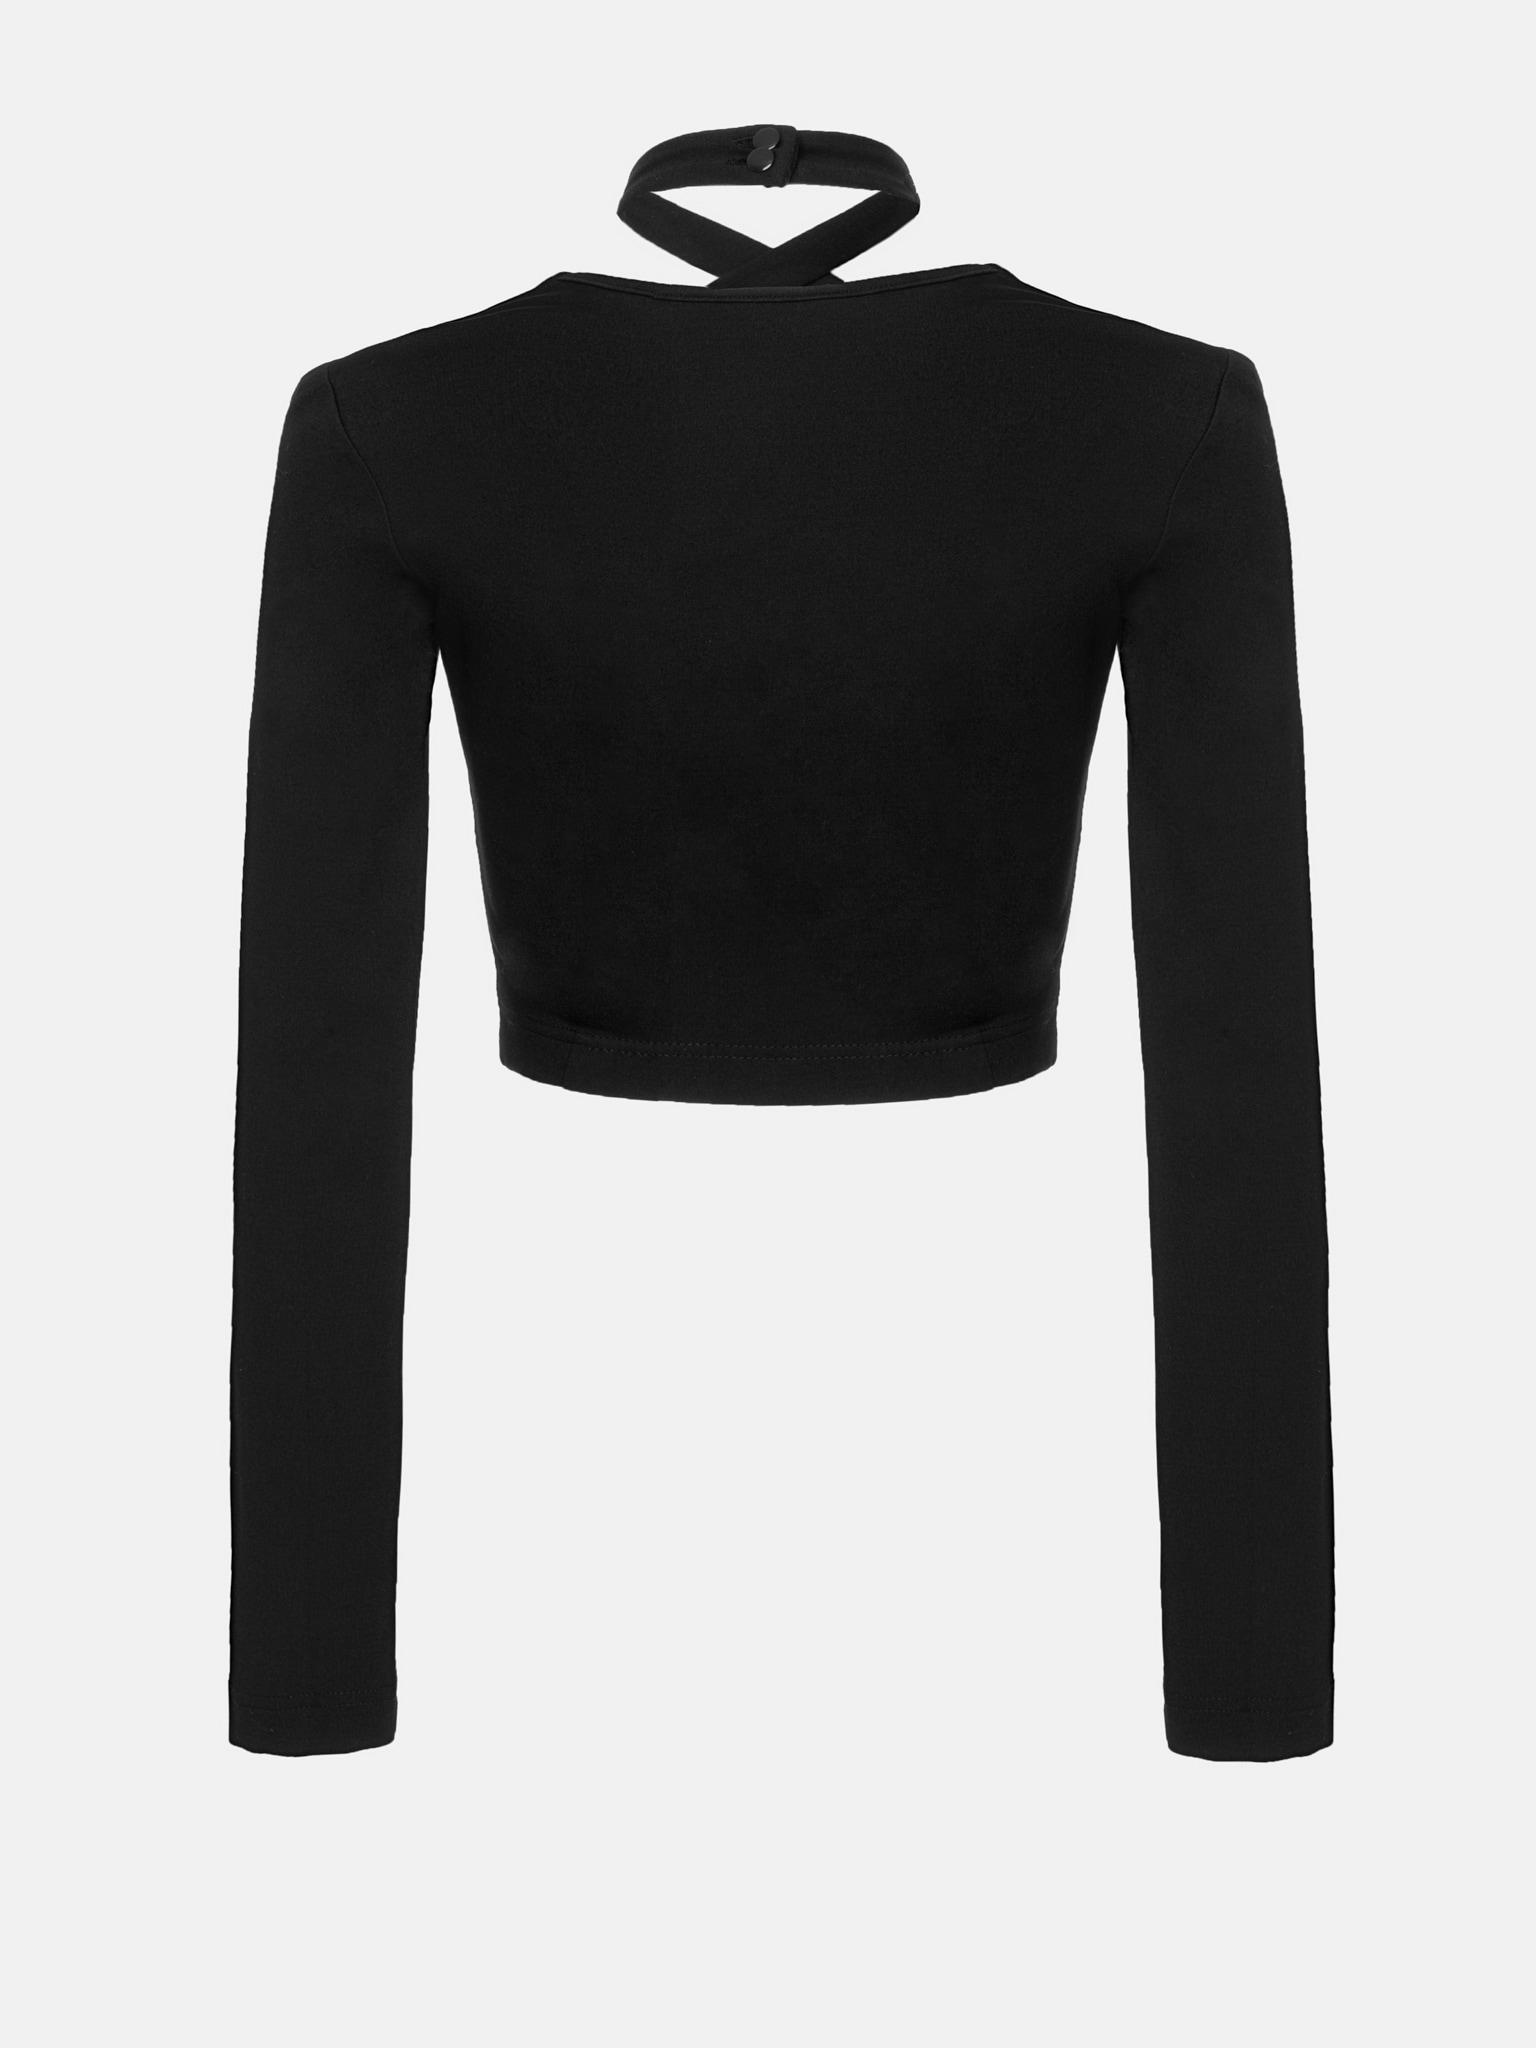 Long-sleeve crop top with halterneck straps :: LICHI - Online fashion store